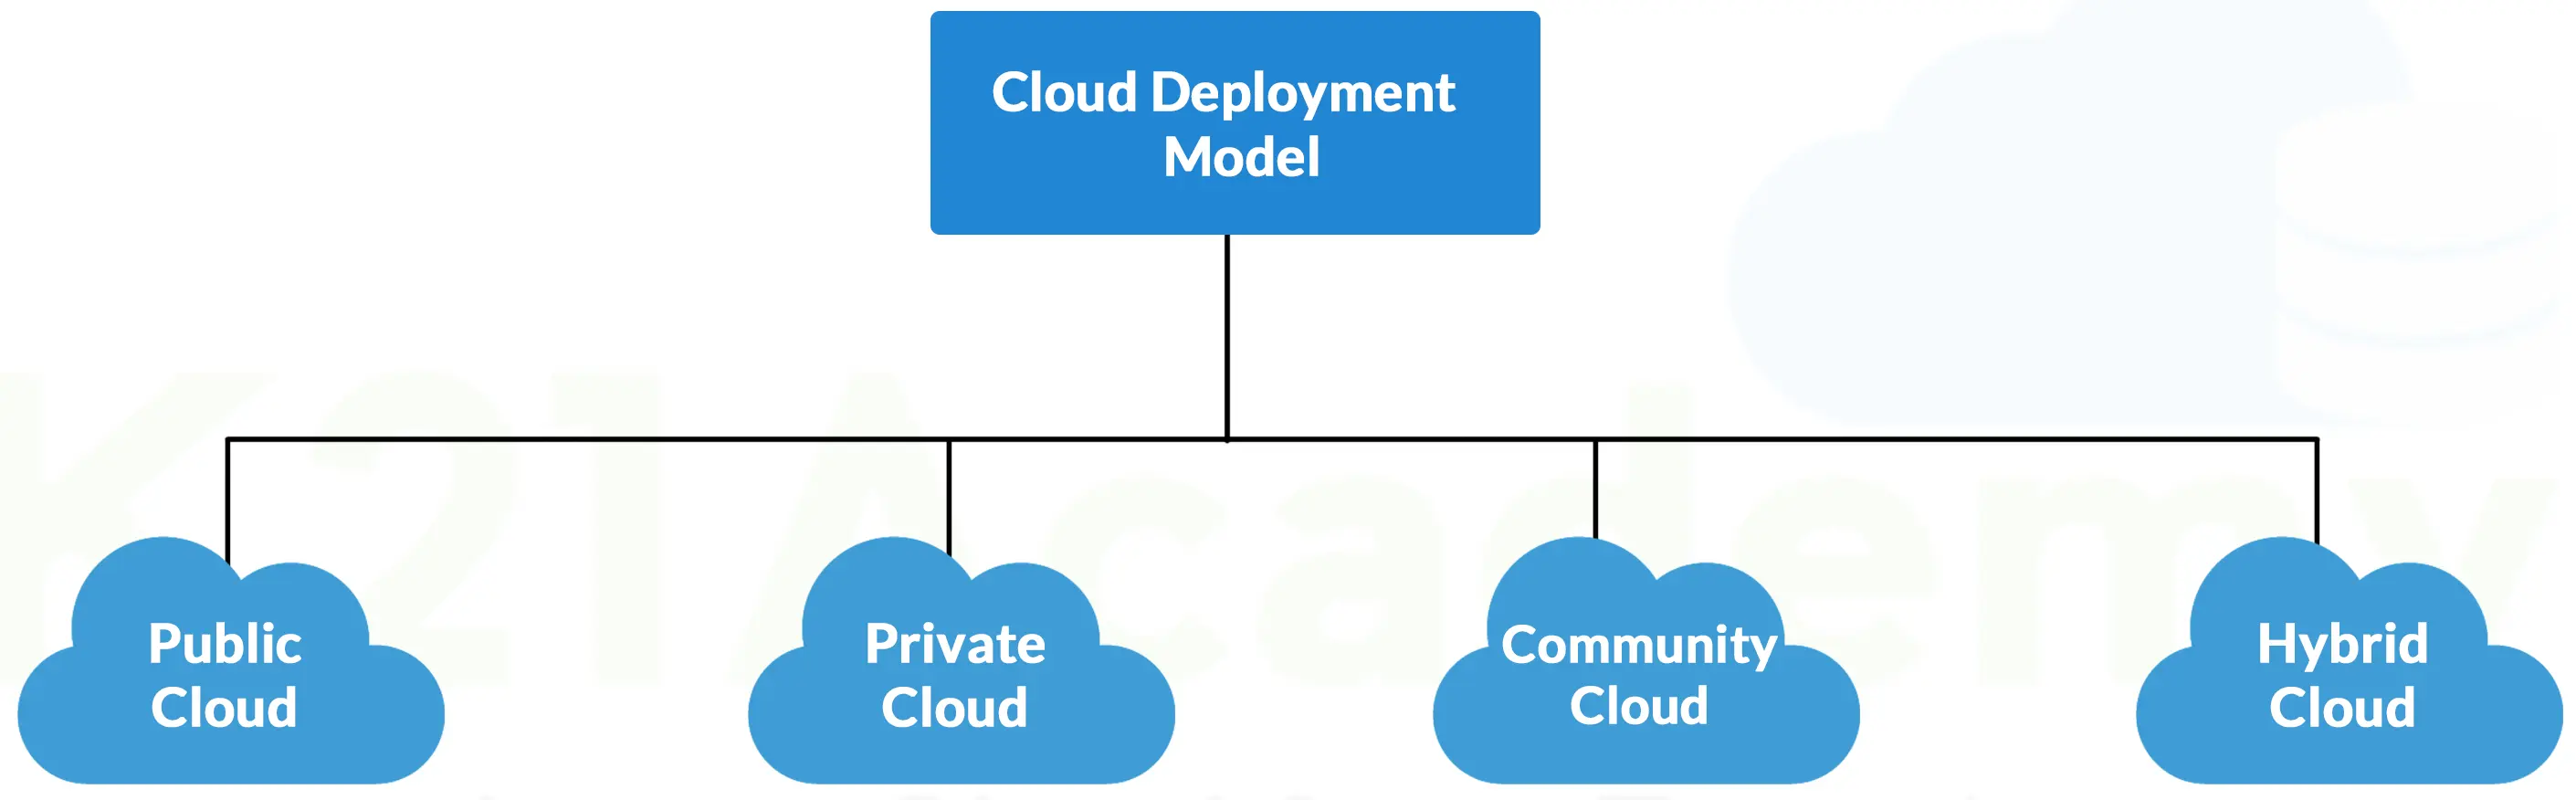 		Figure: Cloud Deployment